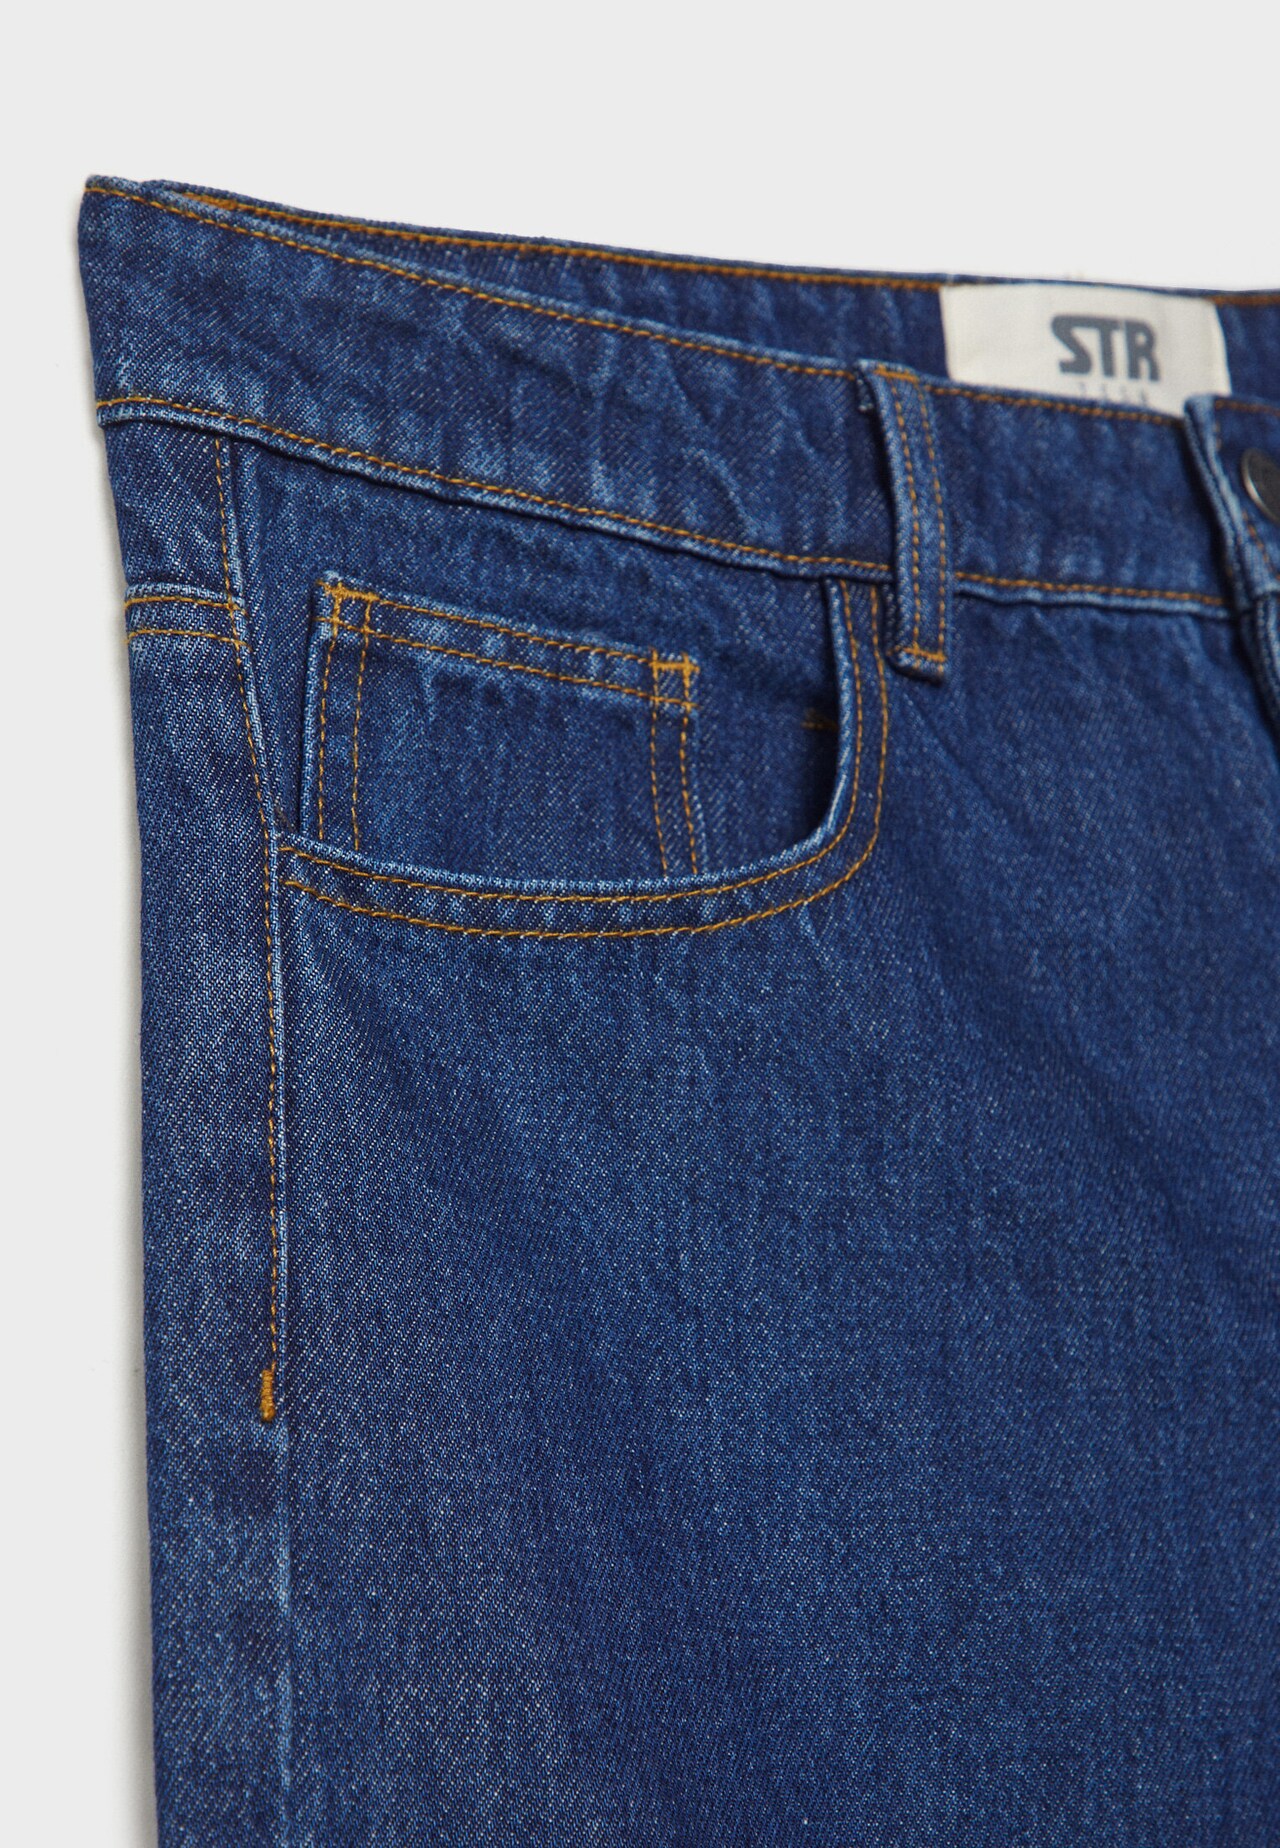 Stradivarius STR cargo jeans in blue